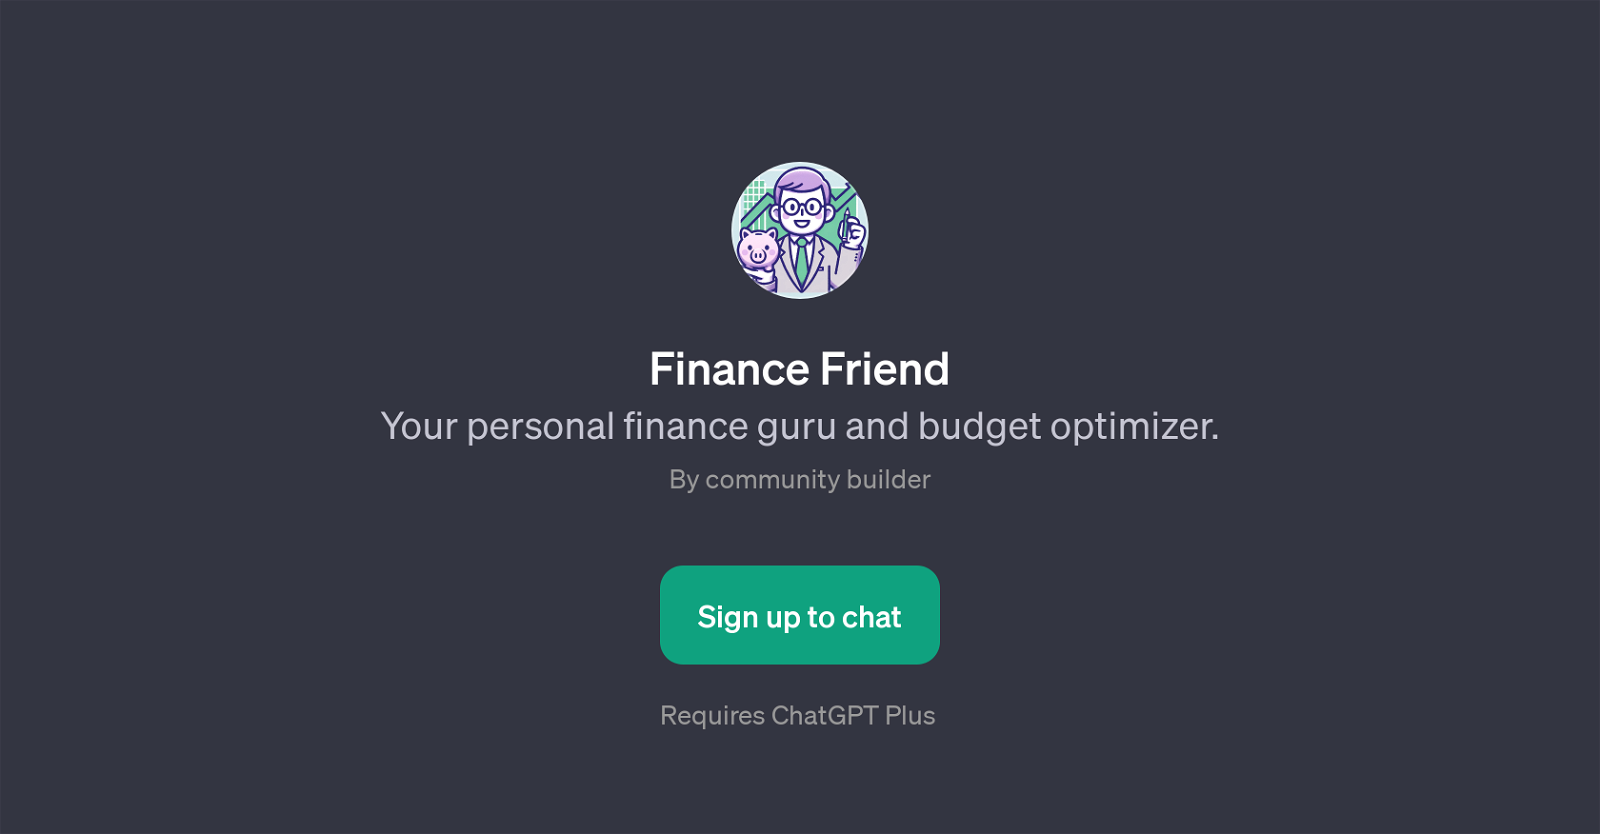 Finance Friend website